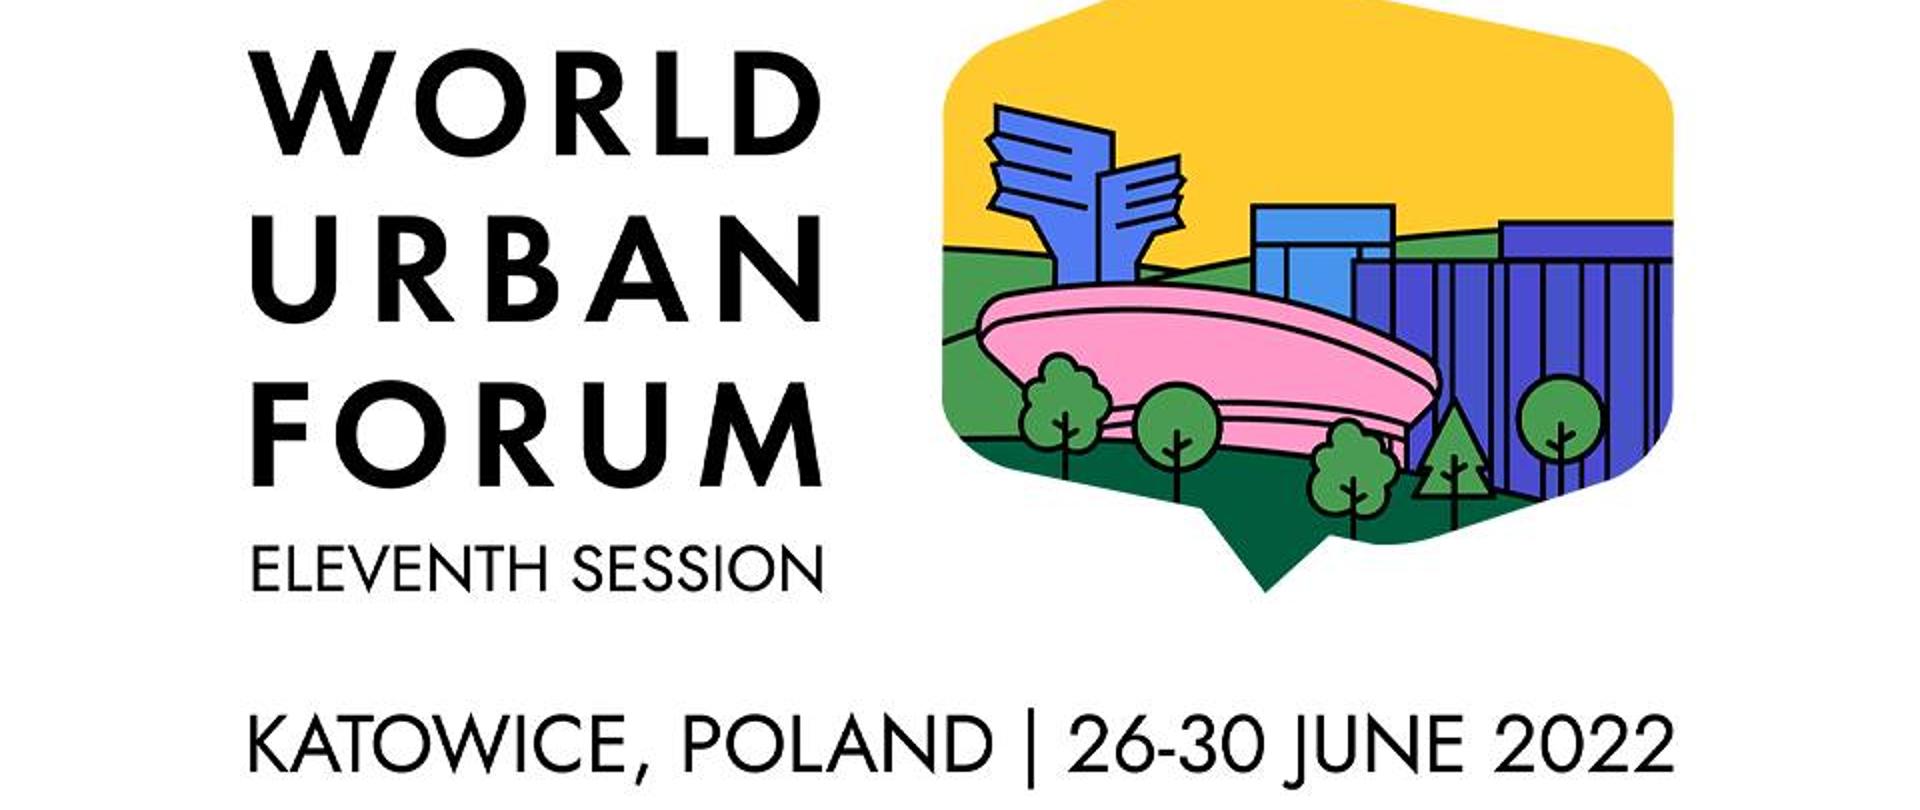 Logo WUF (World Urban Forum, eleventh session, katowice, Poland, 26-30 June 2022)